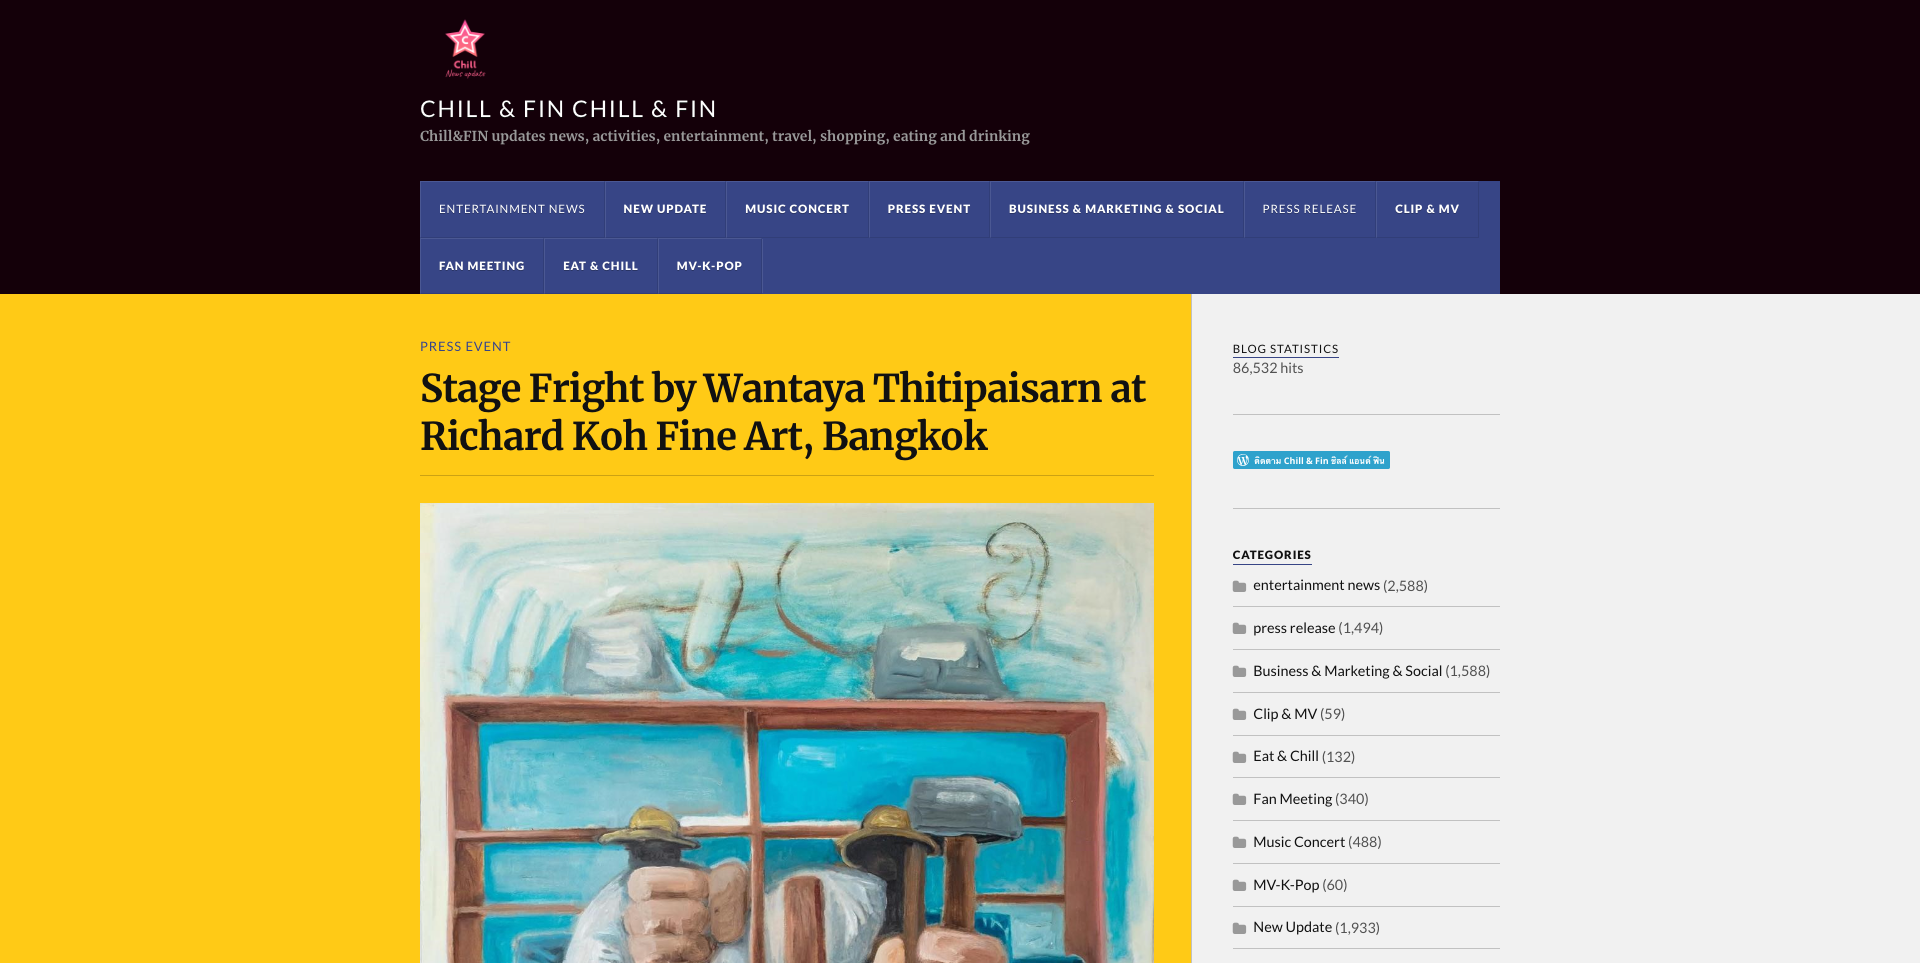 CHILL & FIN CHILL & FIN – Stage Fright exhibition by Wantaya Thitipaisan at Richard Koh Fine Art, Bangkok